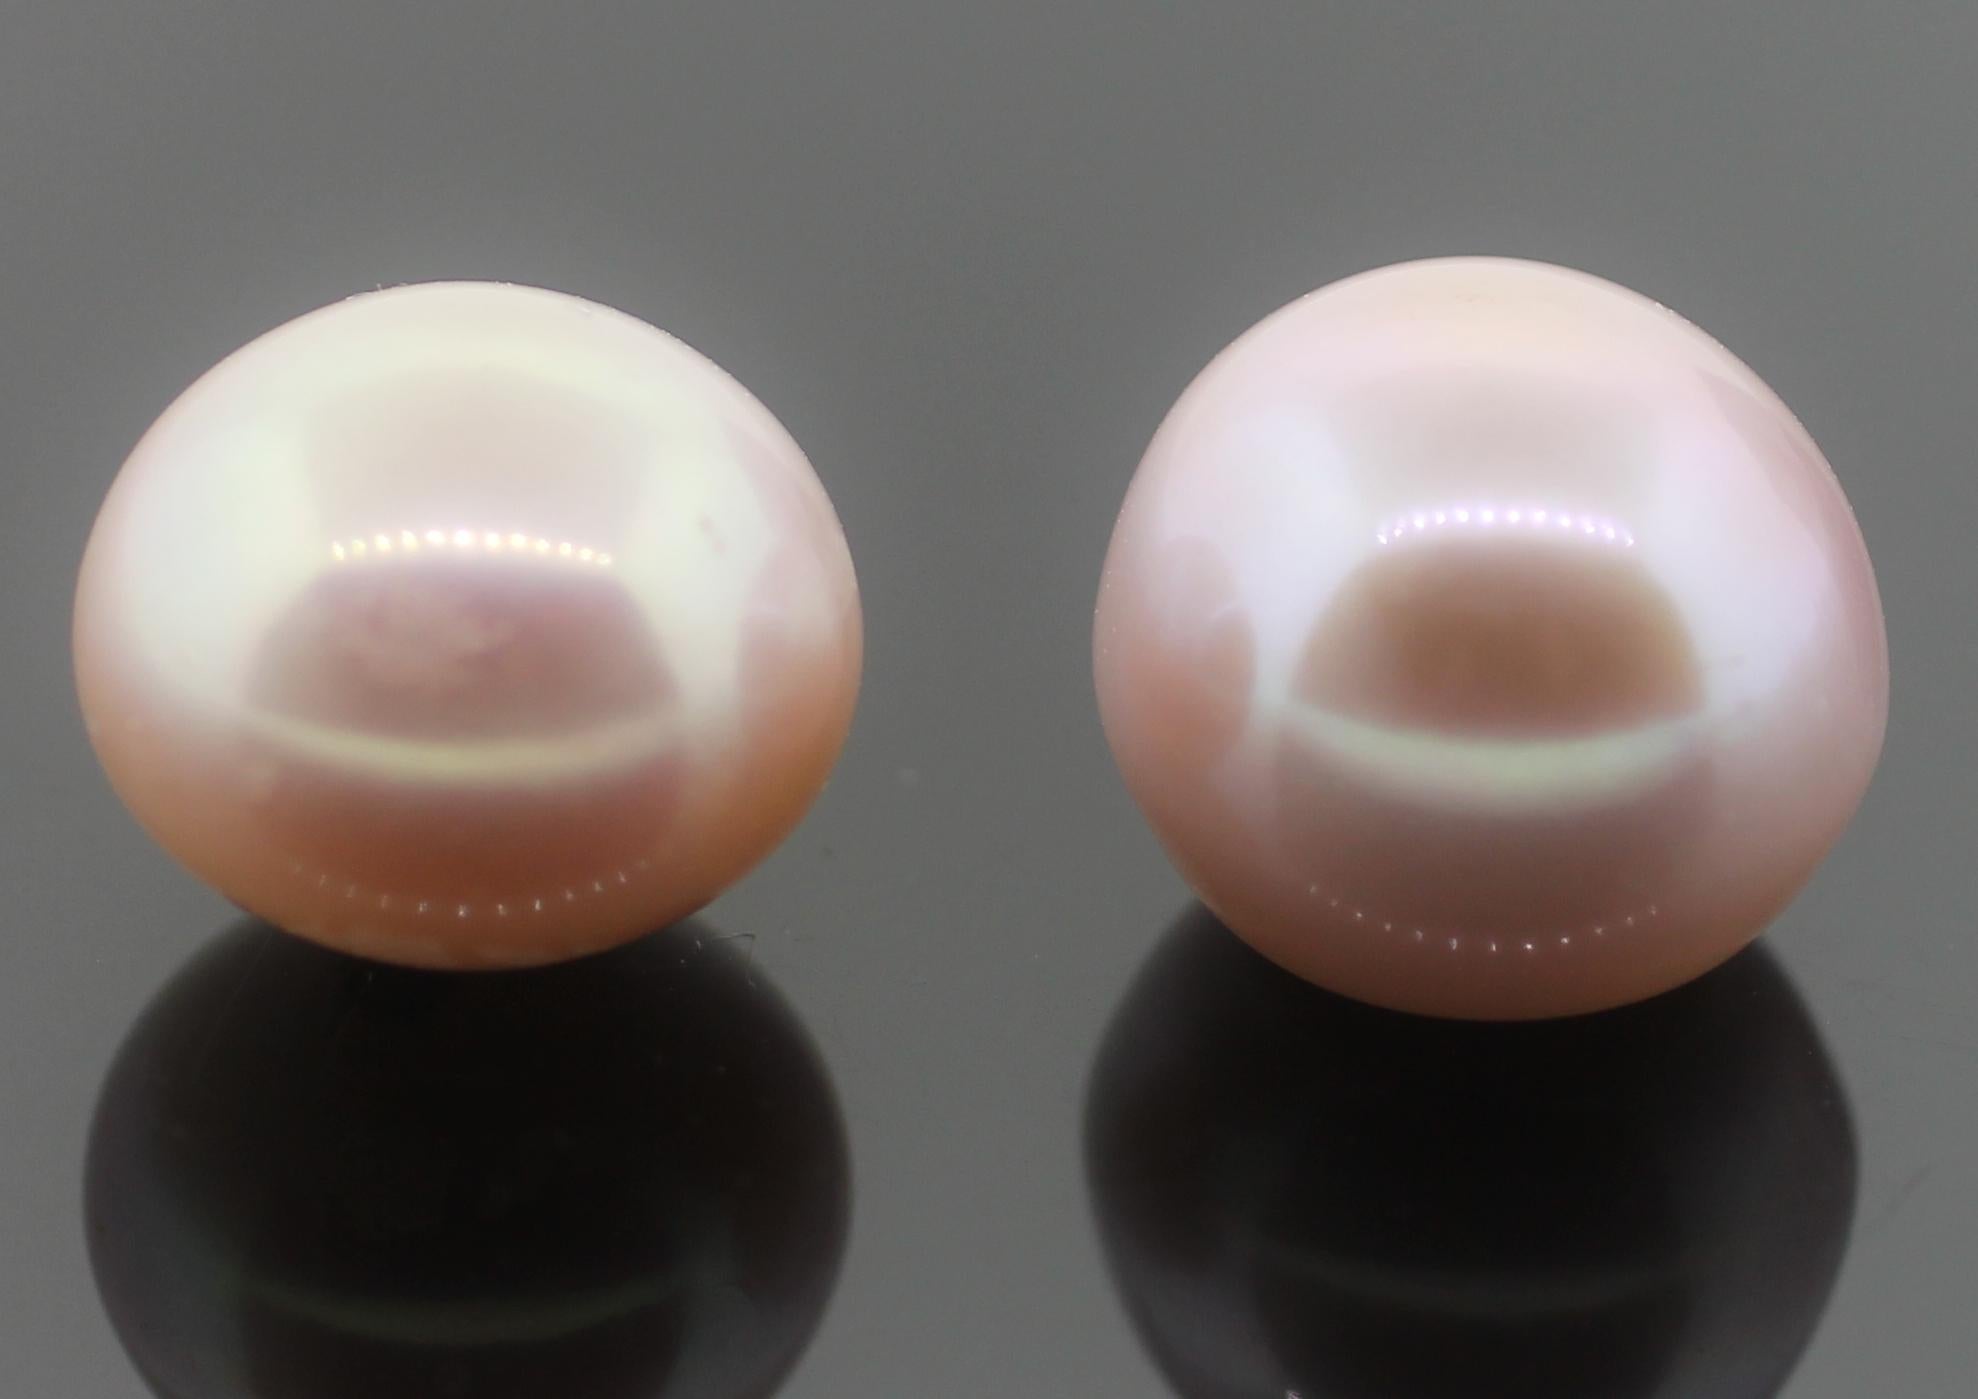 Hakimoto Pink Pair of Botton Cultured Pearls
7.6 grams
14.5-14.4 mm
Aproximat